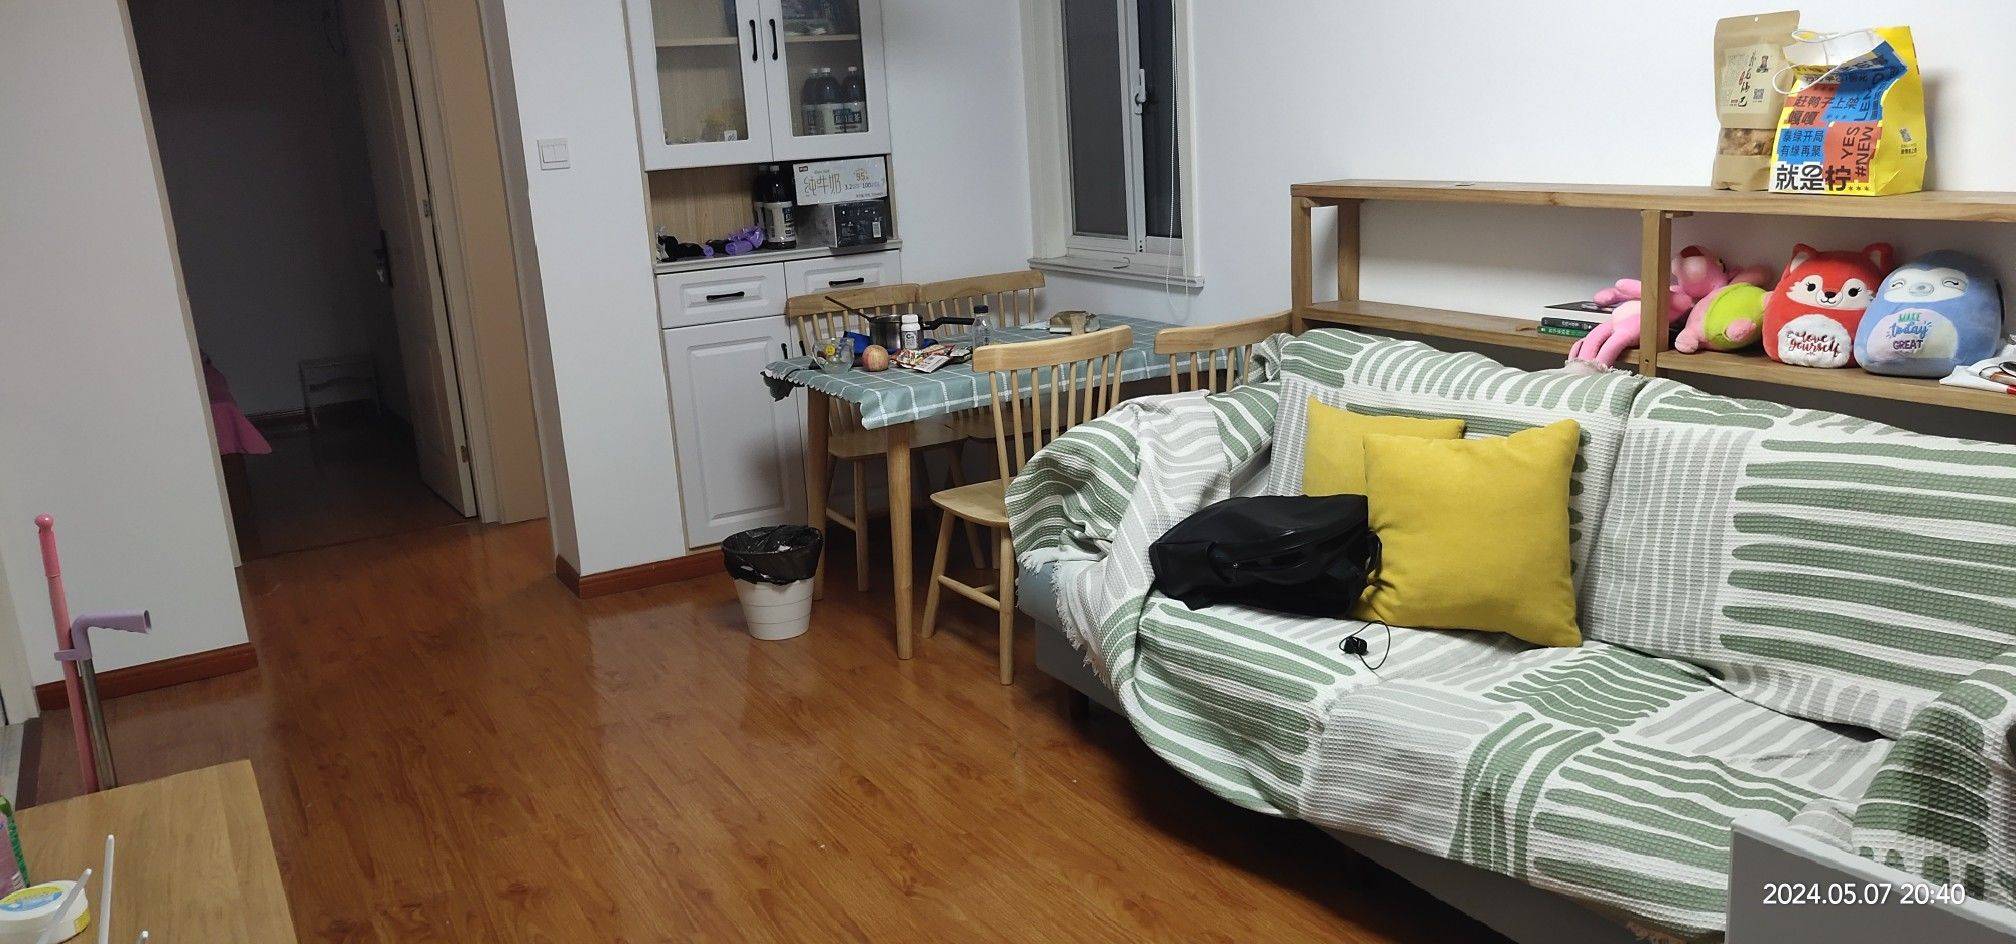 Nanjing-Qixia-Cozy Home,Clean&Comfy,“Friends”,Chilled,Pet Friendly